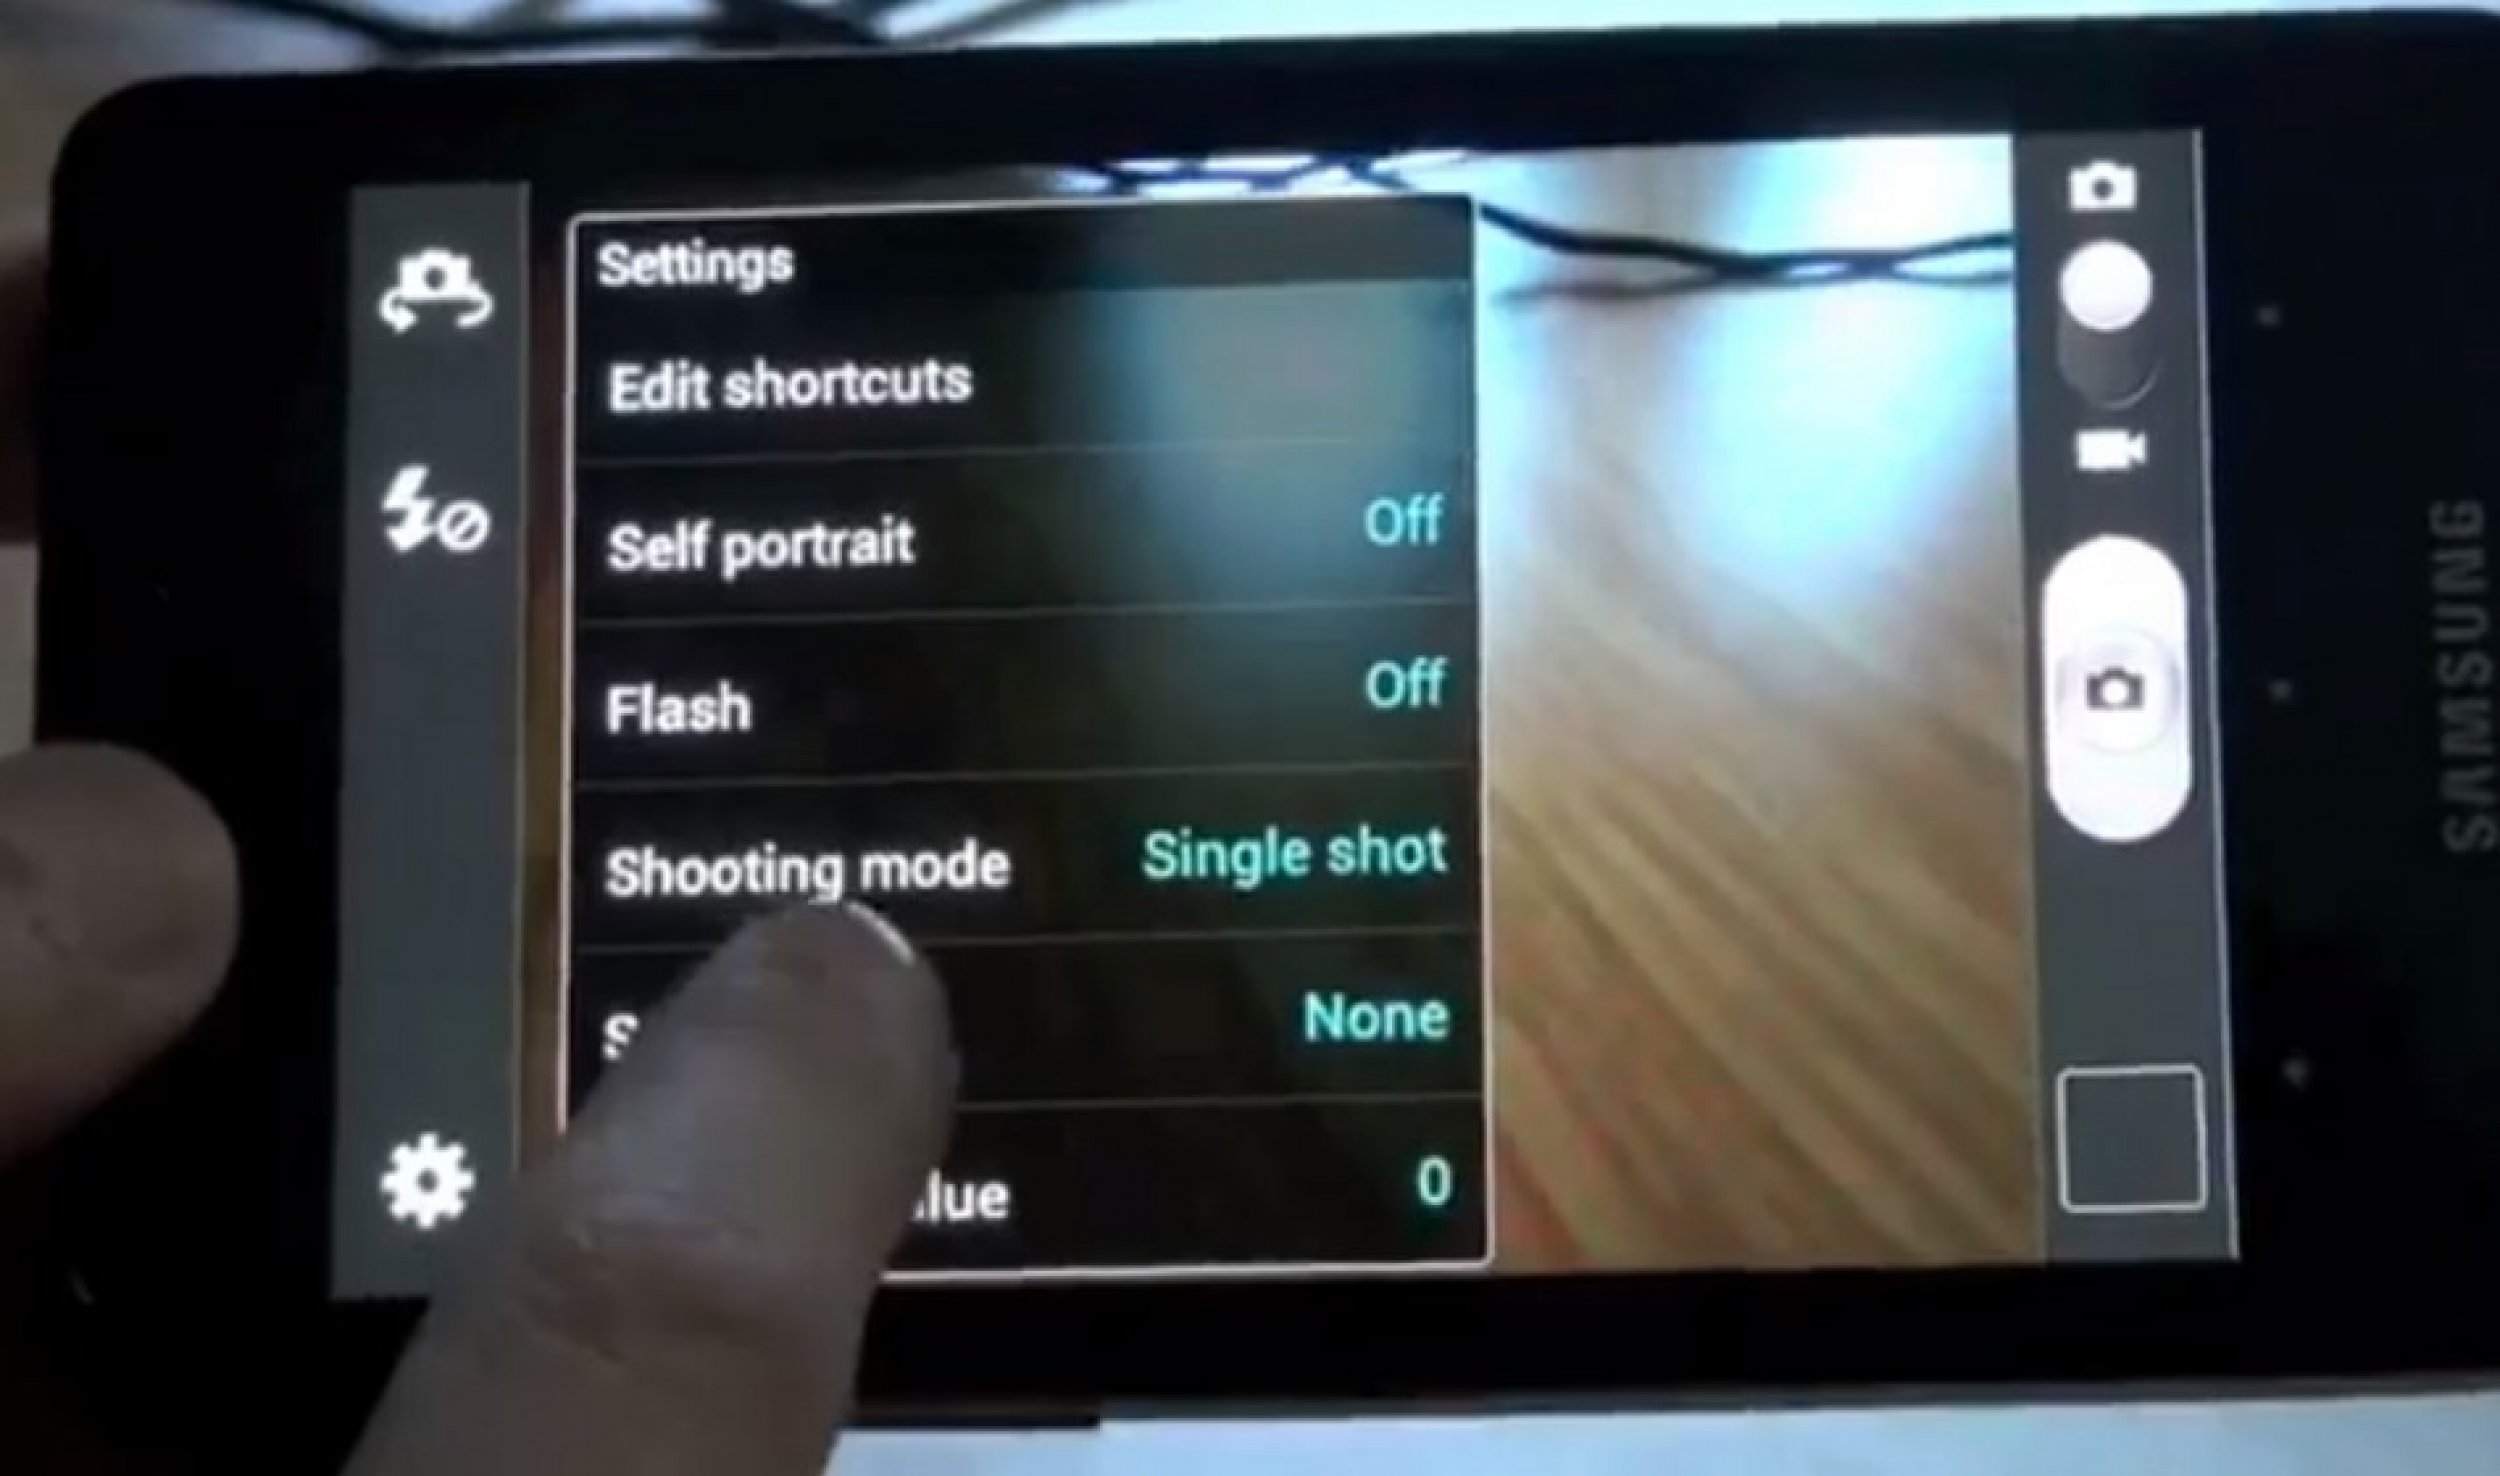 Samsung Galaxy S3 - Camera Options